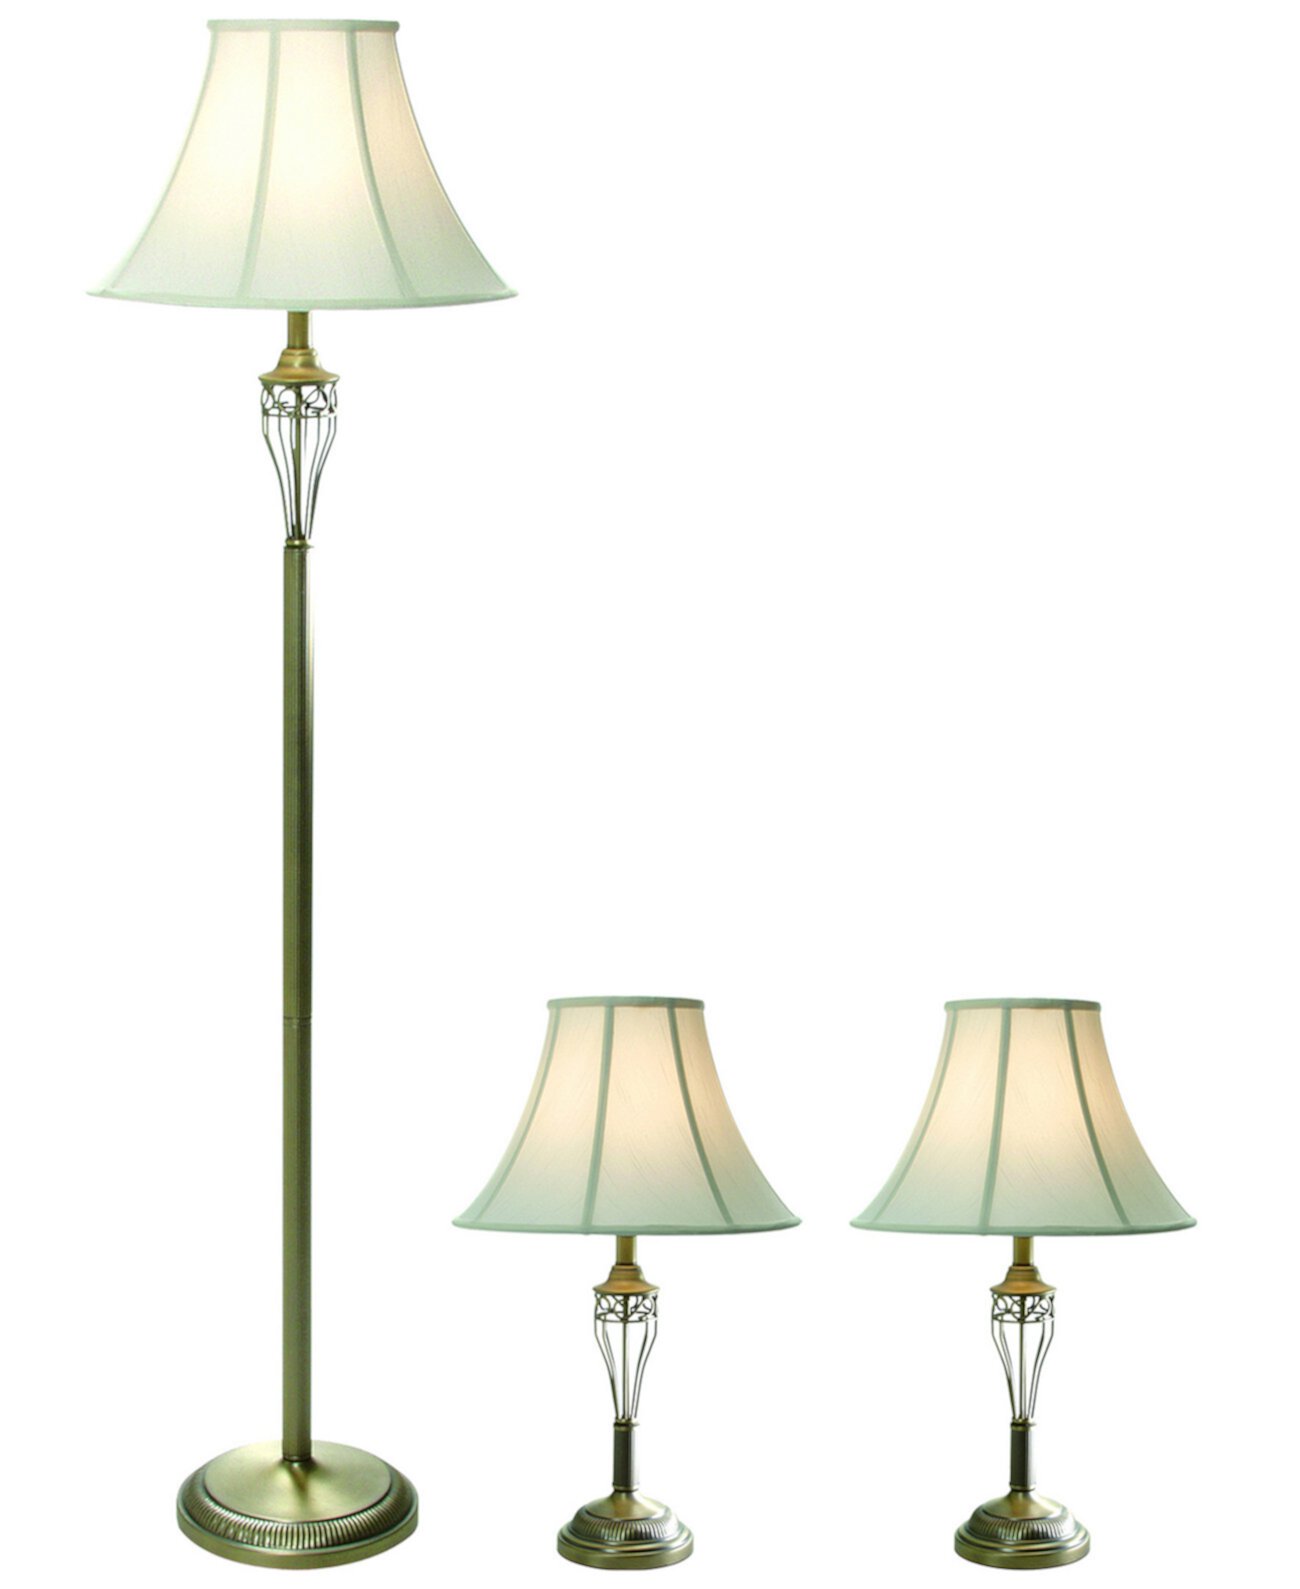 Комплект из трех античных латунных ламп Elegant Designs (2 настольные лампы, 1 торшер) All The Rages